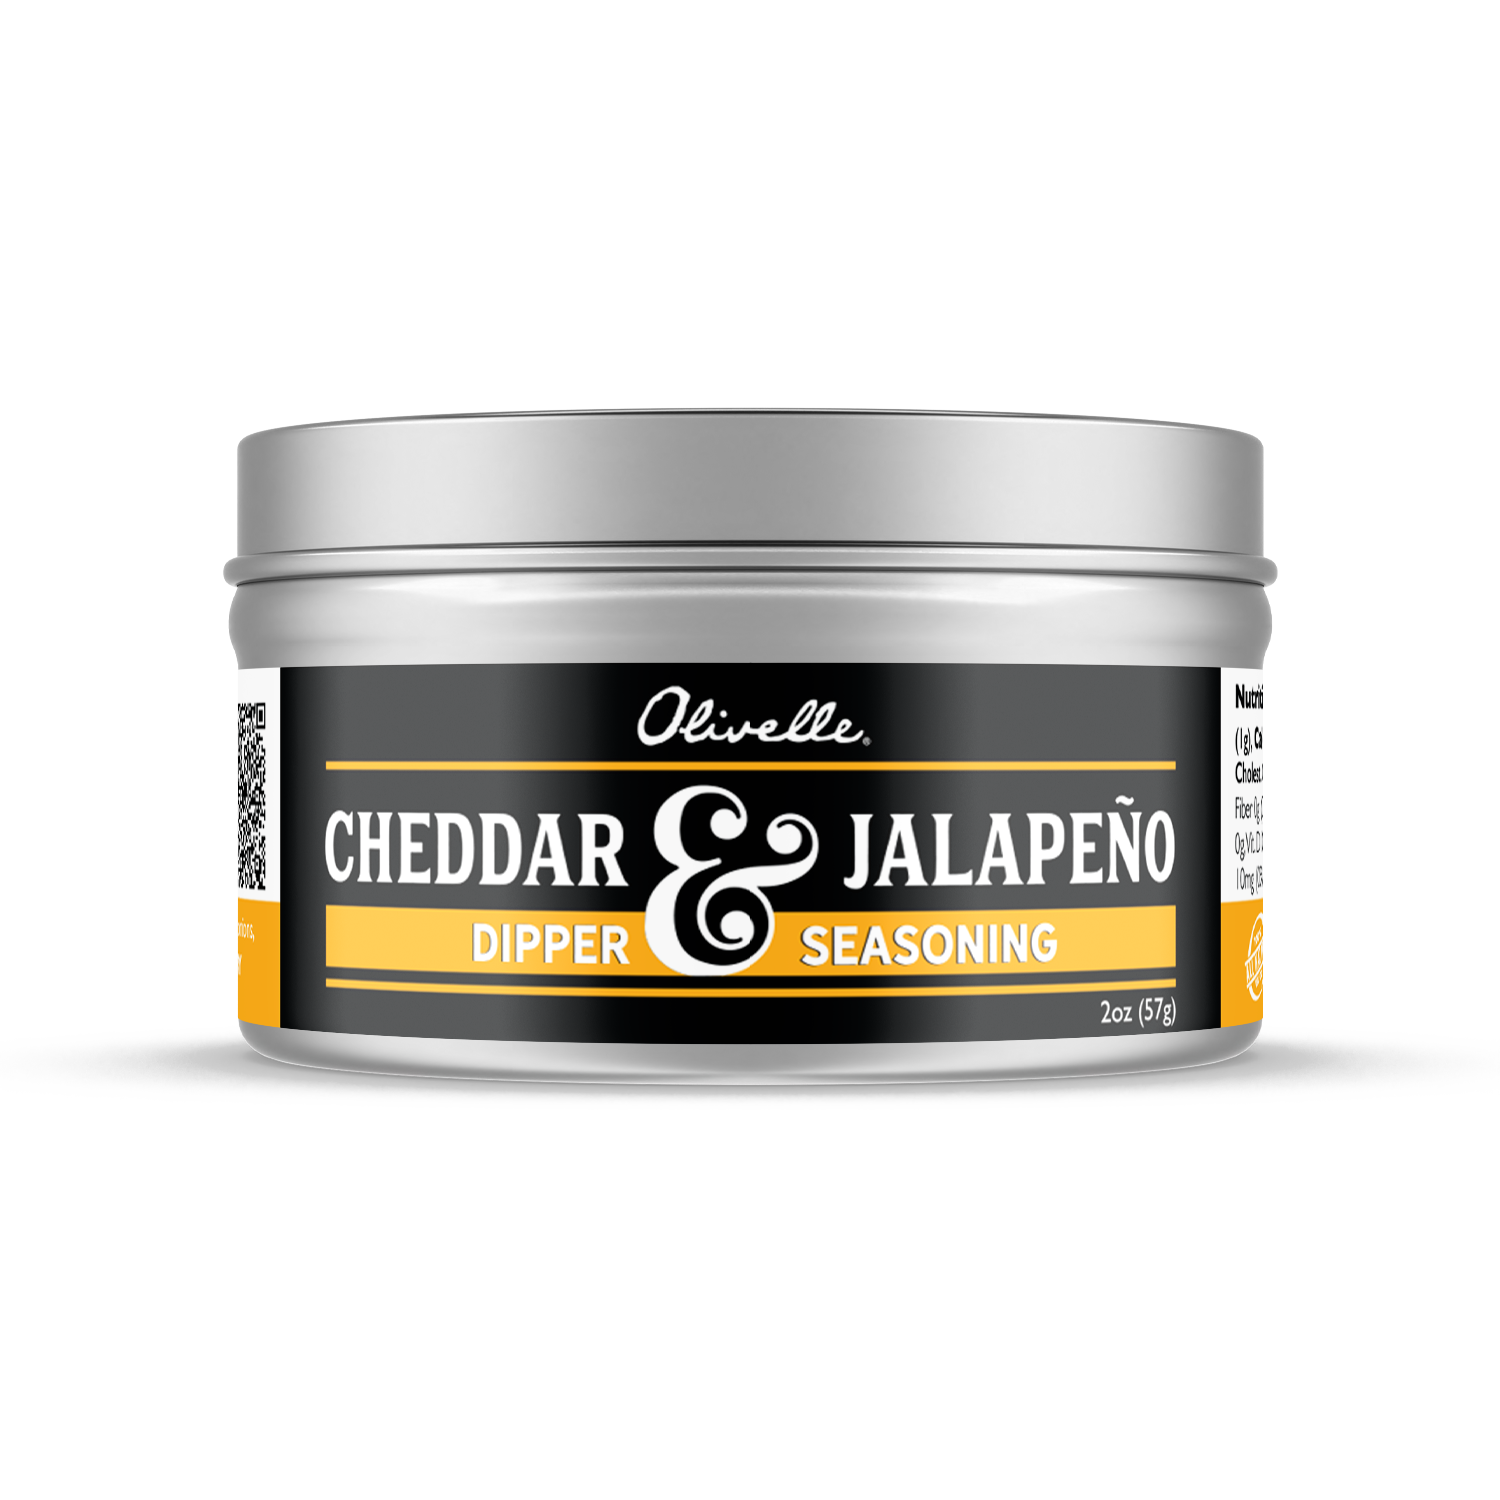 Cheddar & Jalapeno Dipper and Seasoning